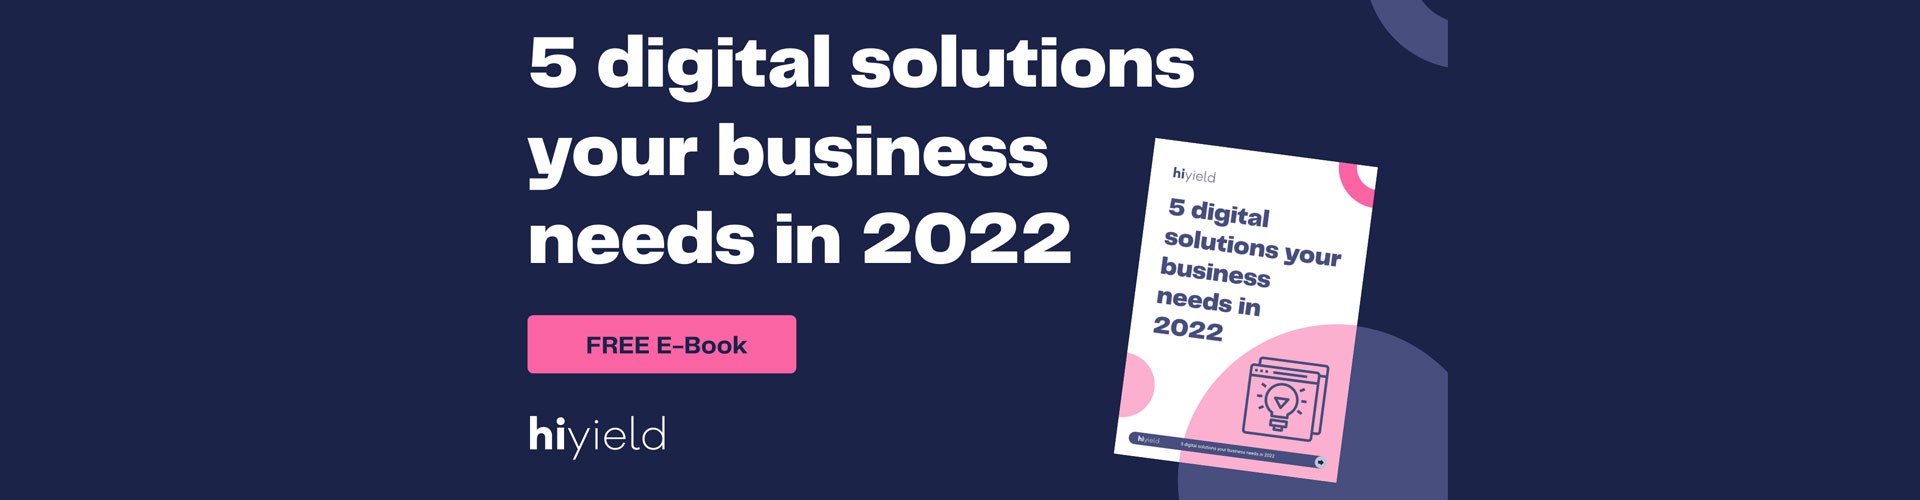 digital solutions banner